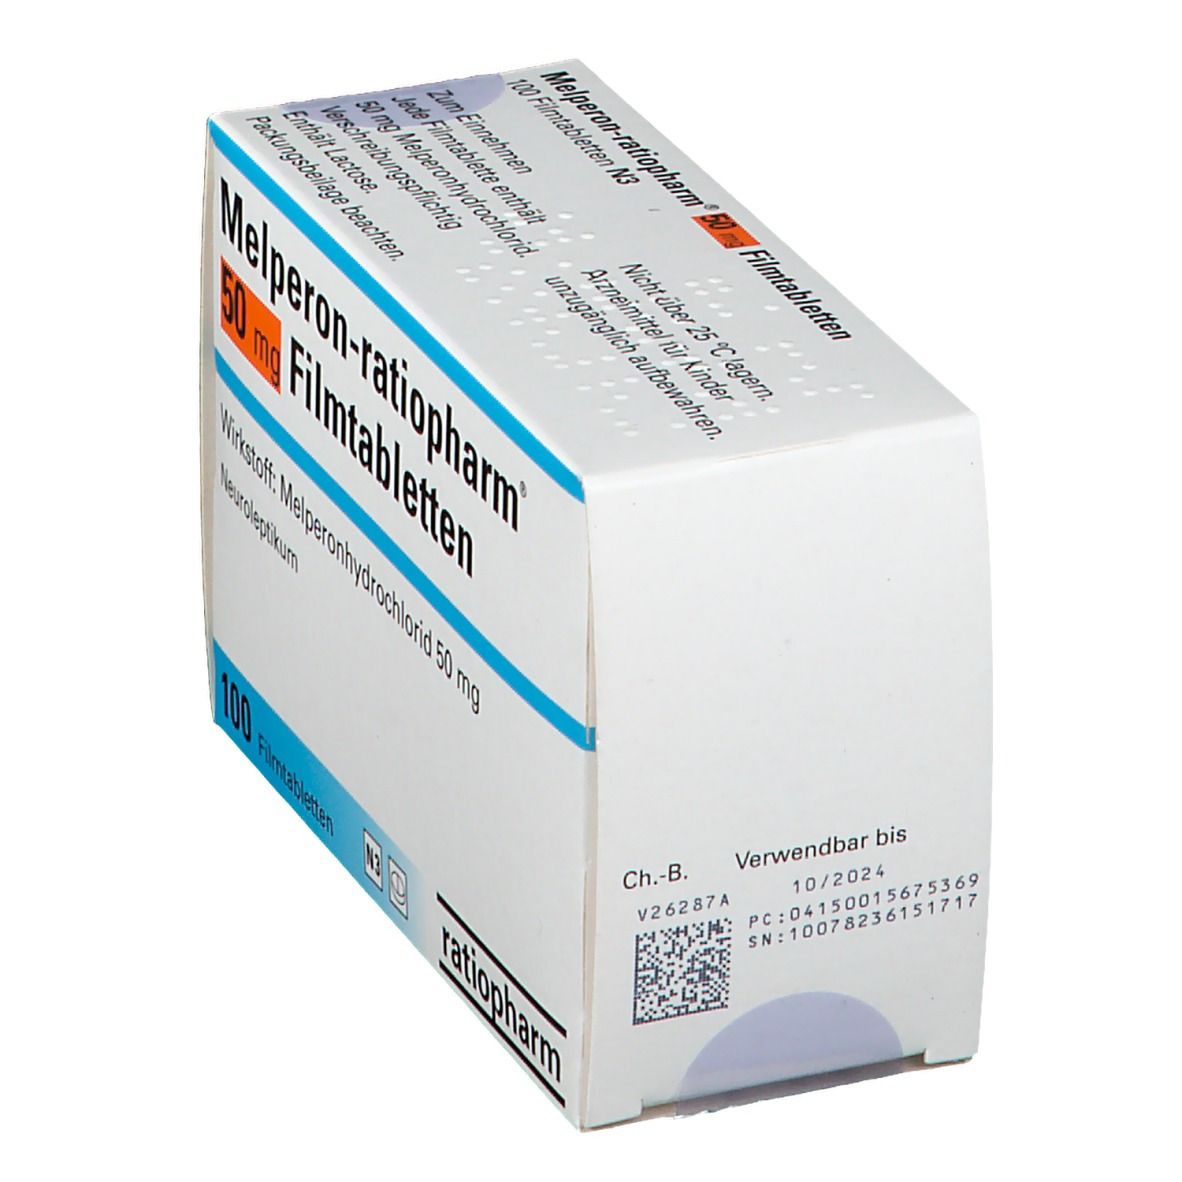 Melperon-ratiopharm® 50 mg